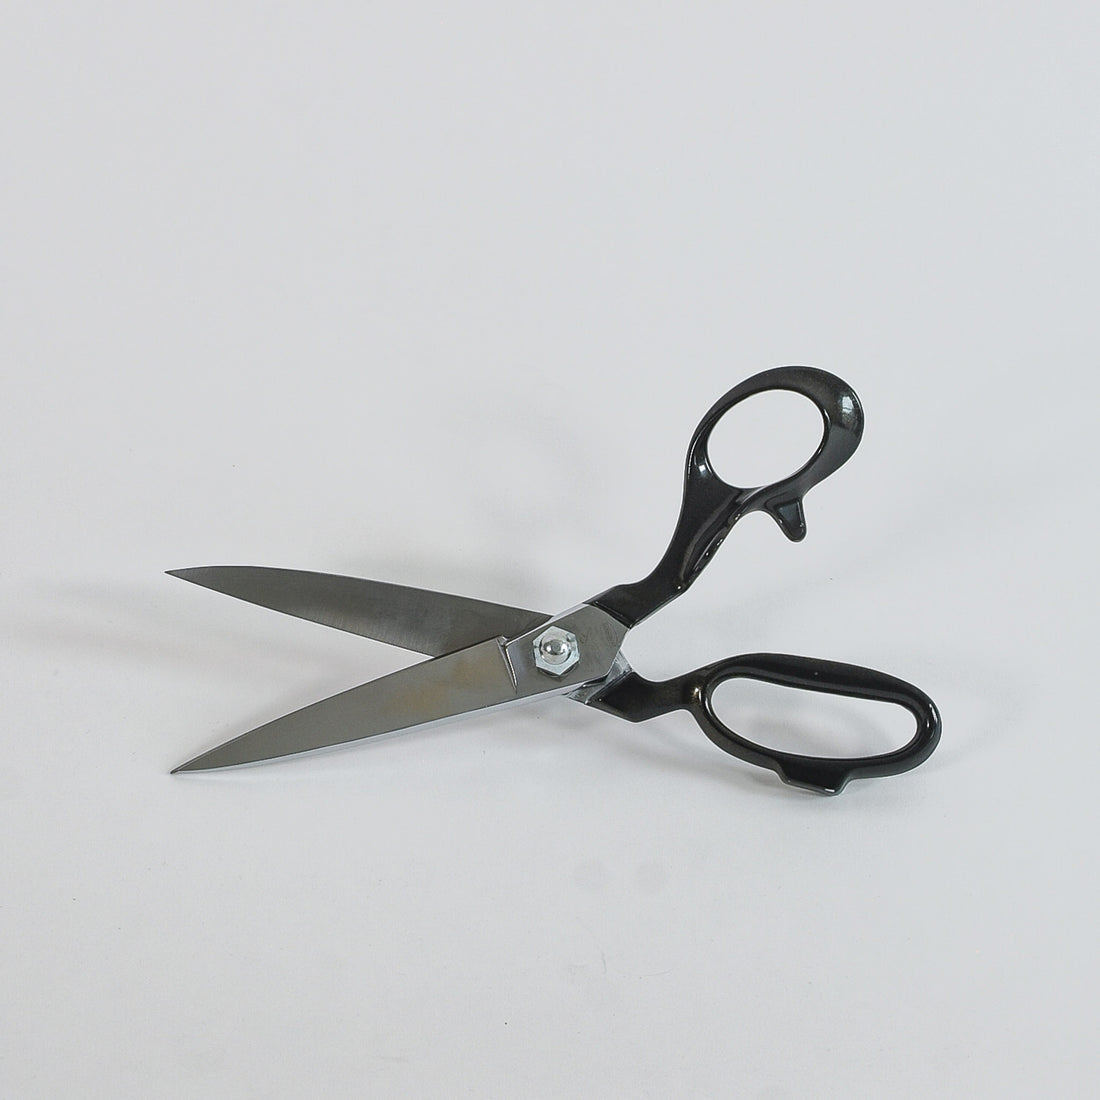 Stary City Premium Tailor Scissors Heavy Duty Multi-Purpose Titanium  Scissors Professional for Leather Cutting Industrial Sharp Sewing Shears (2